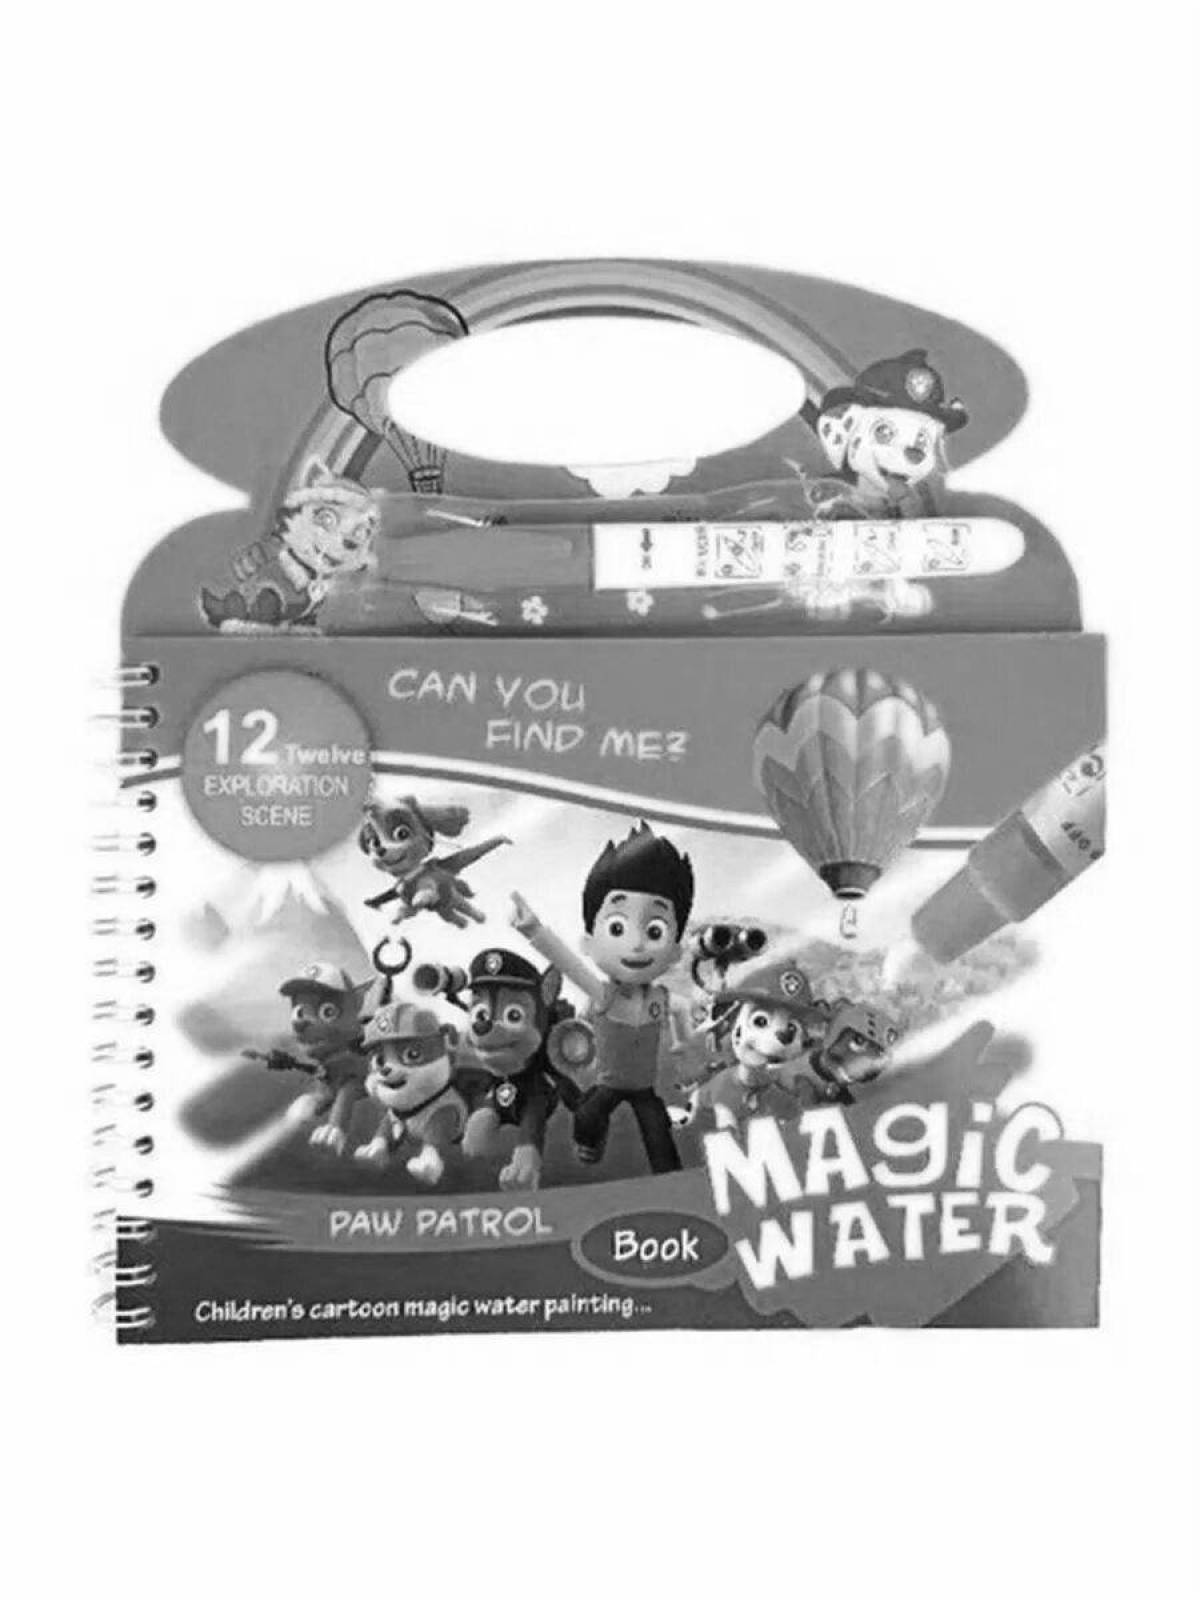 Fun coloring magic water book